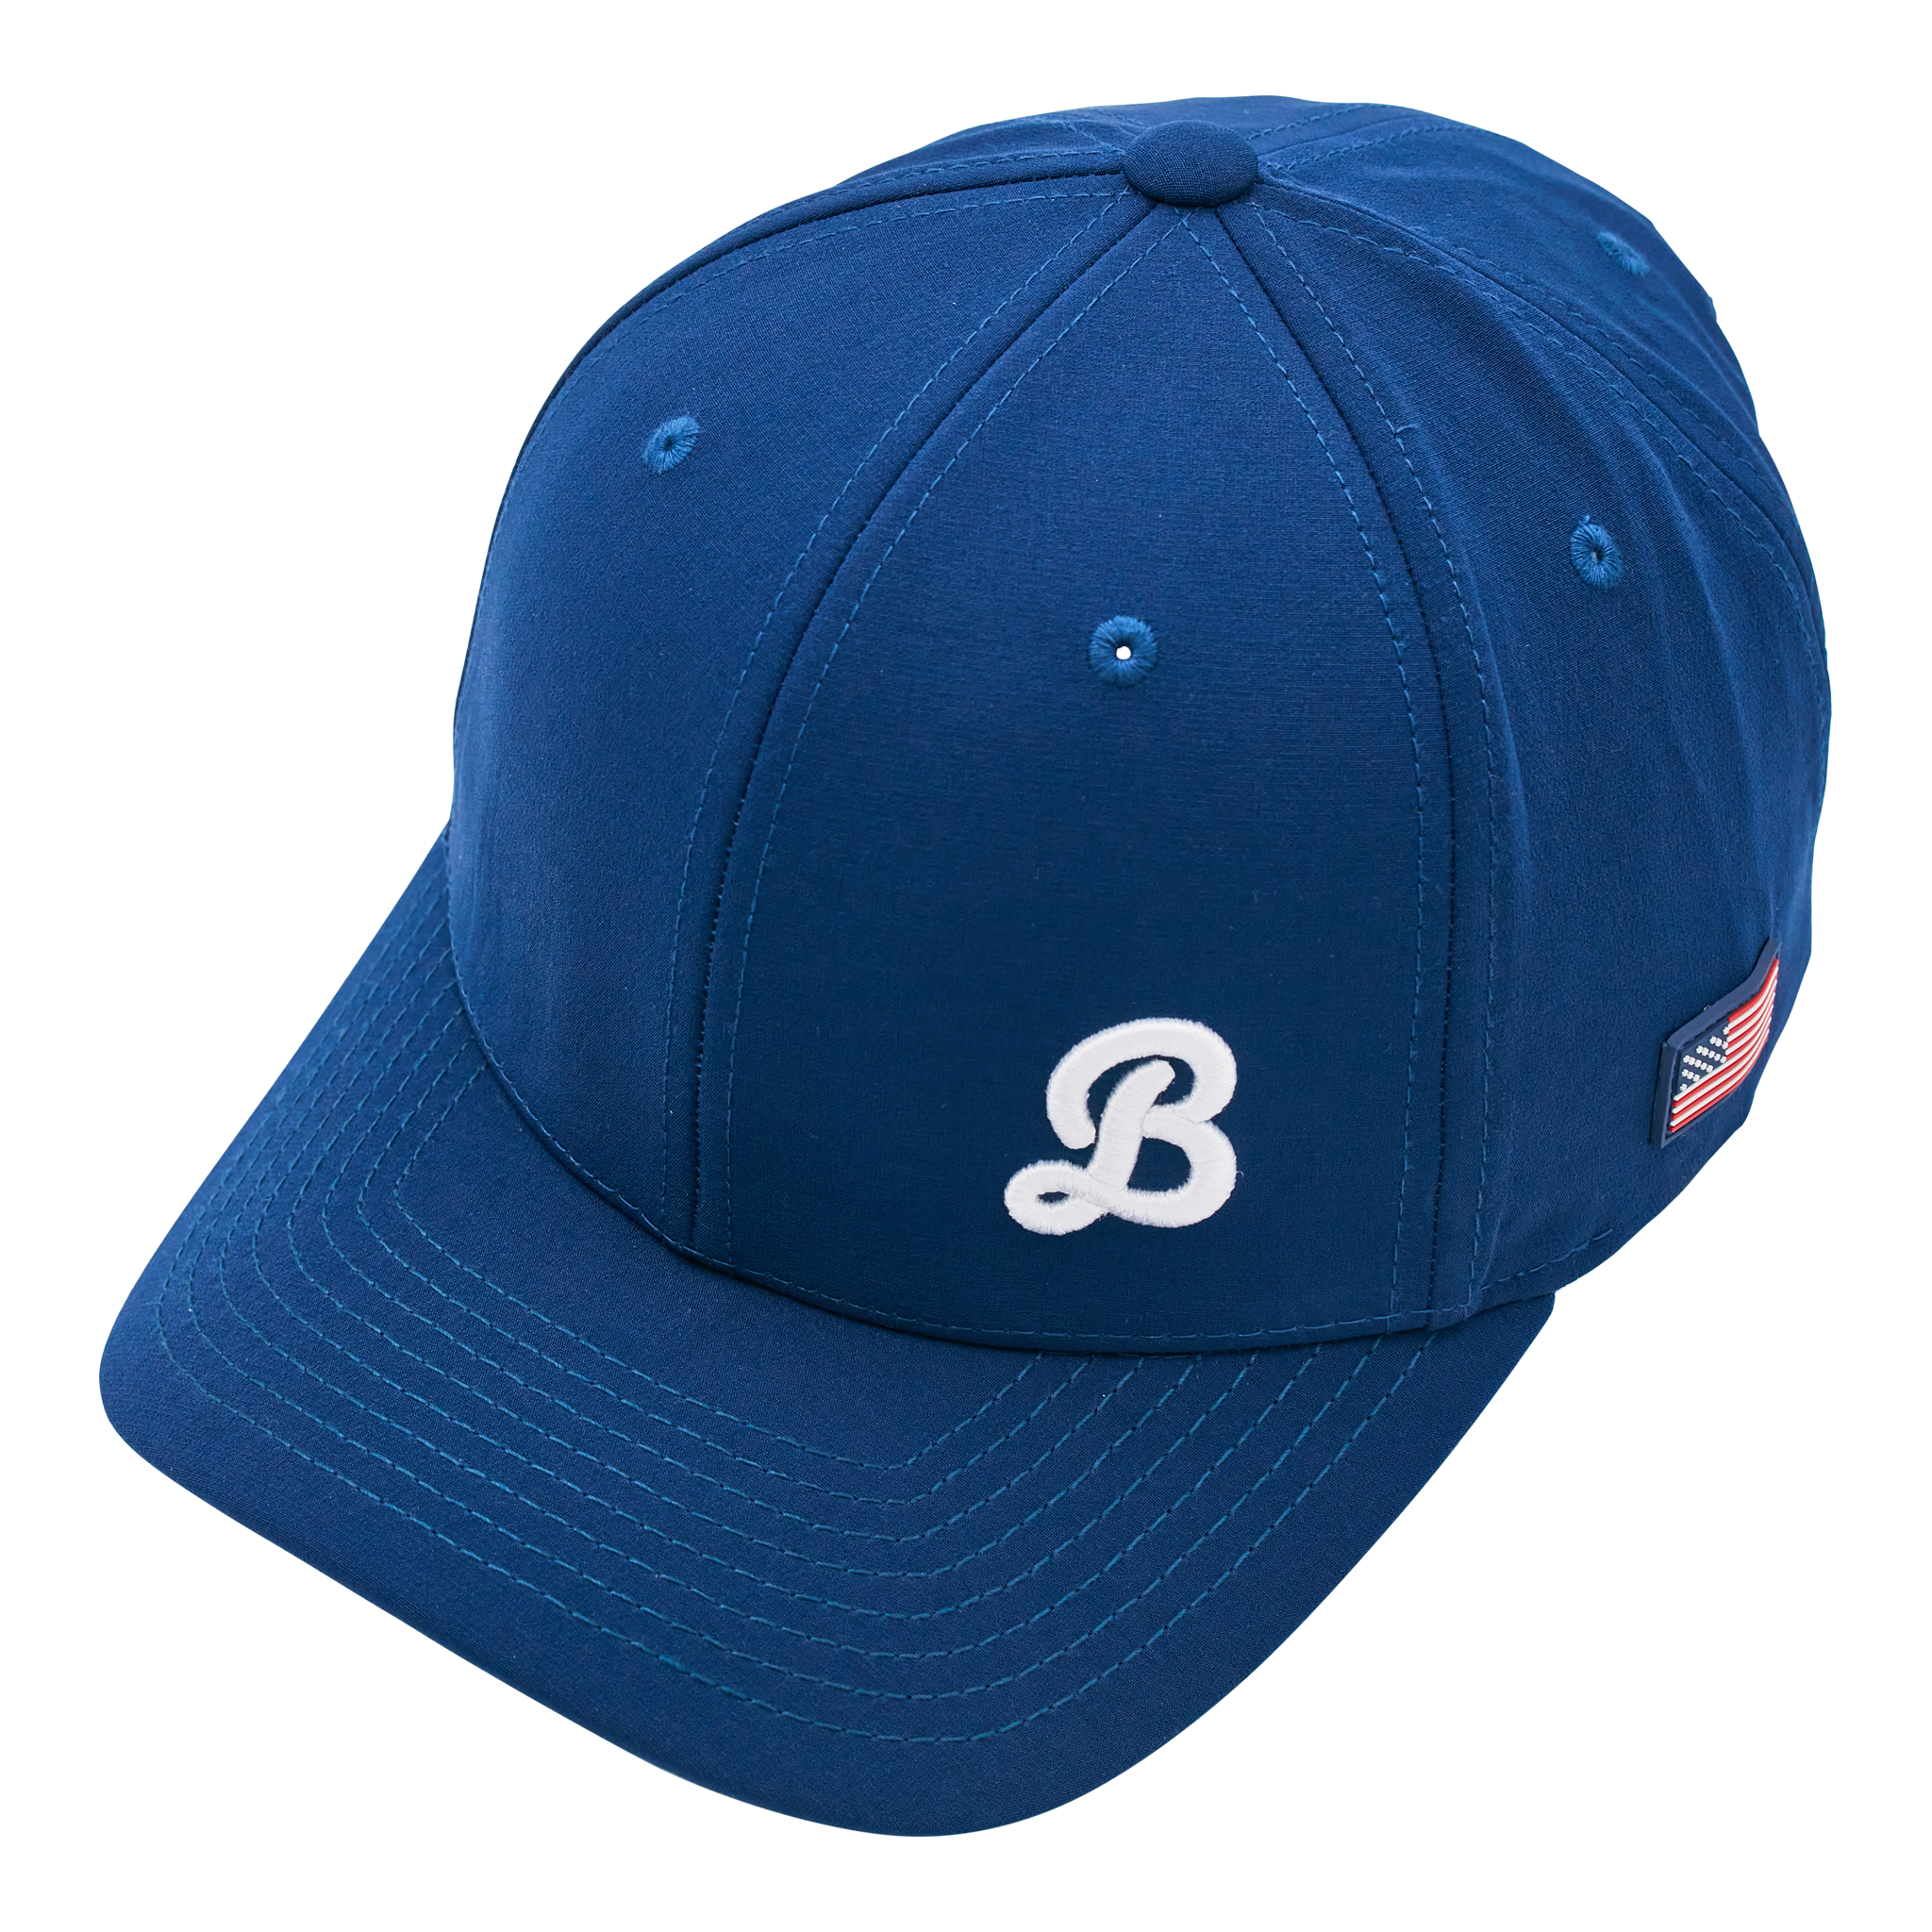 Bettinardi Cursive B Navy Snapback Performance Hat